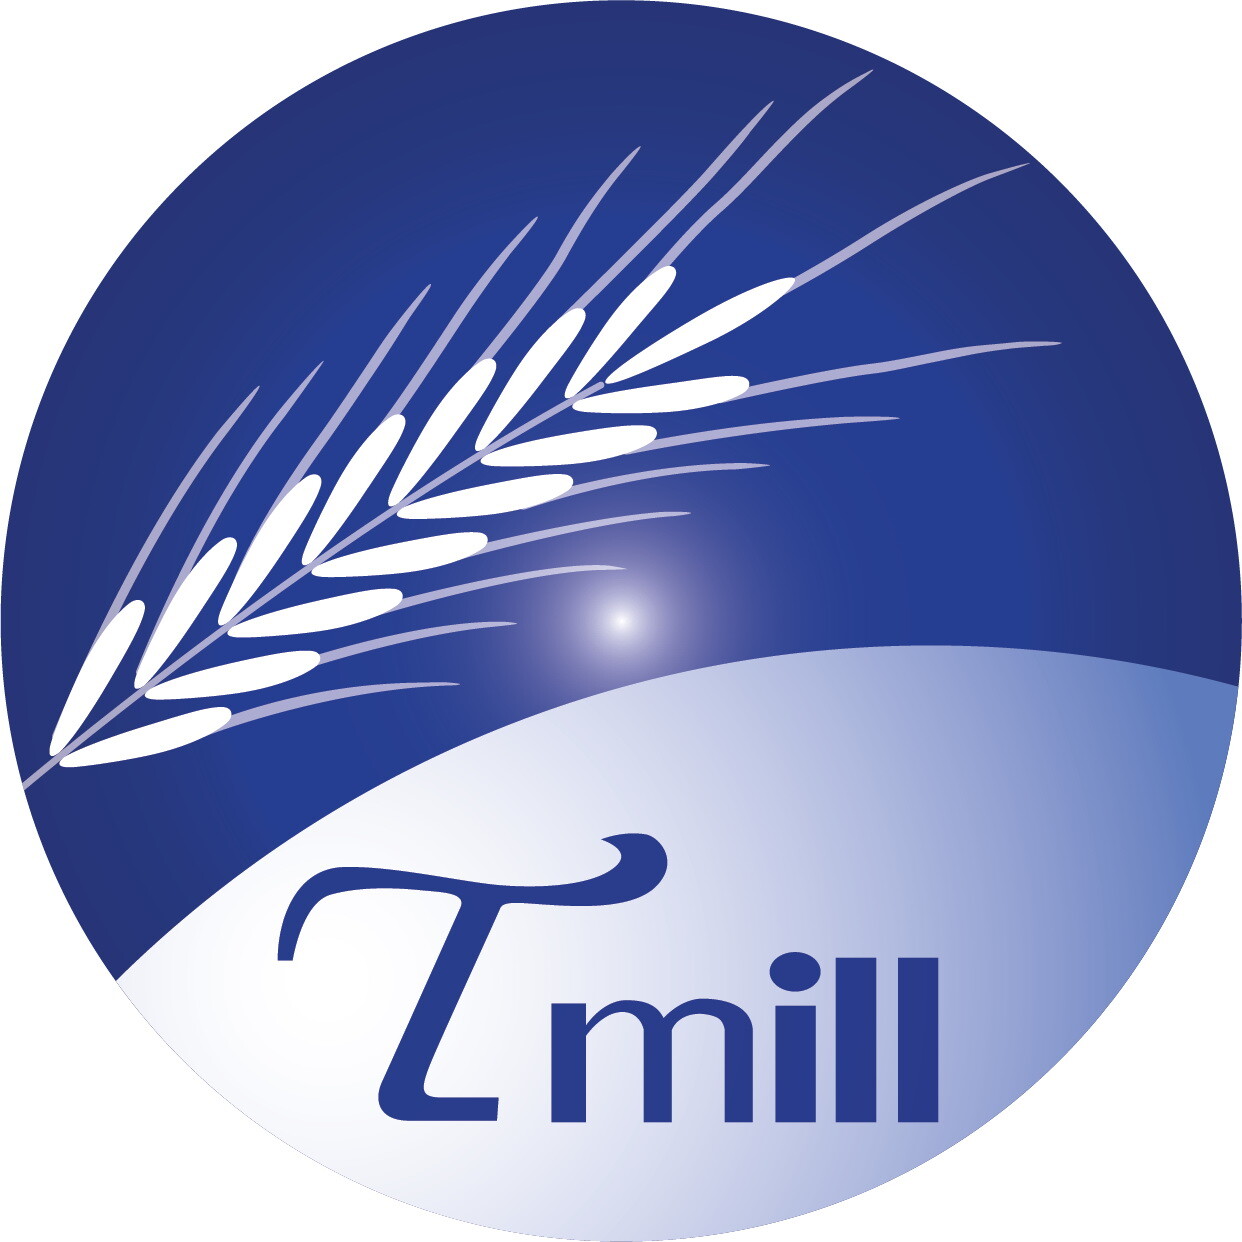 TMILL เตรียมจัดประชุมผู้ถือหุ้น2564 วันที่ 29 เม.ย. 64 พร้อมเพิ่มช่องทางผ่านออนไลน์ ลดเสี่ยงโควิด-19